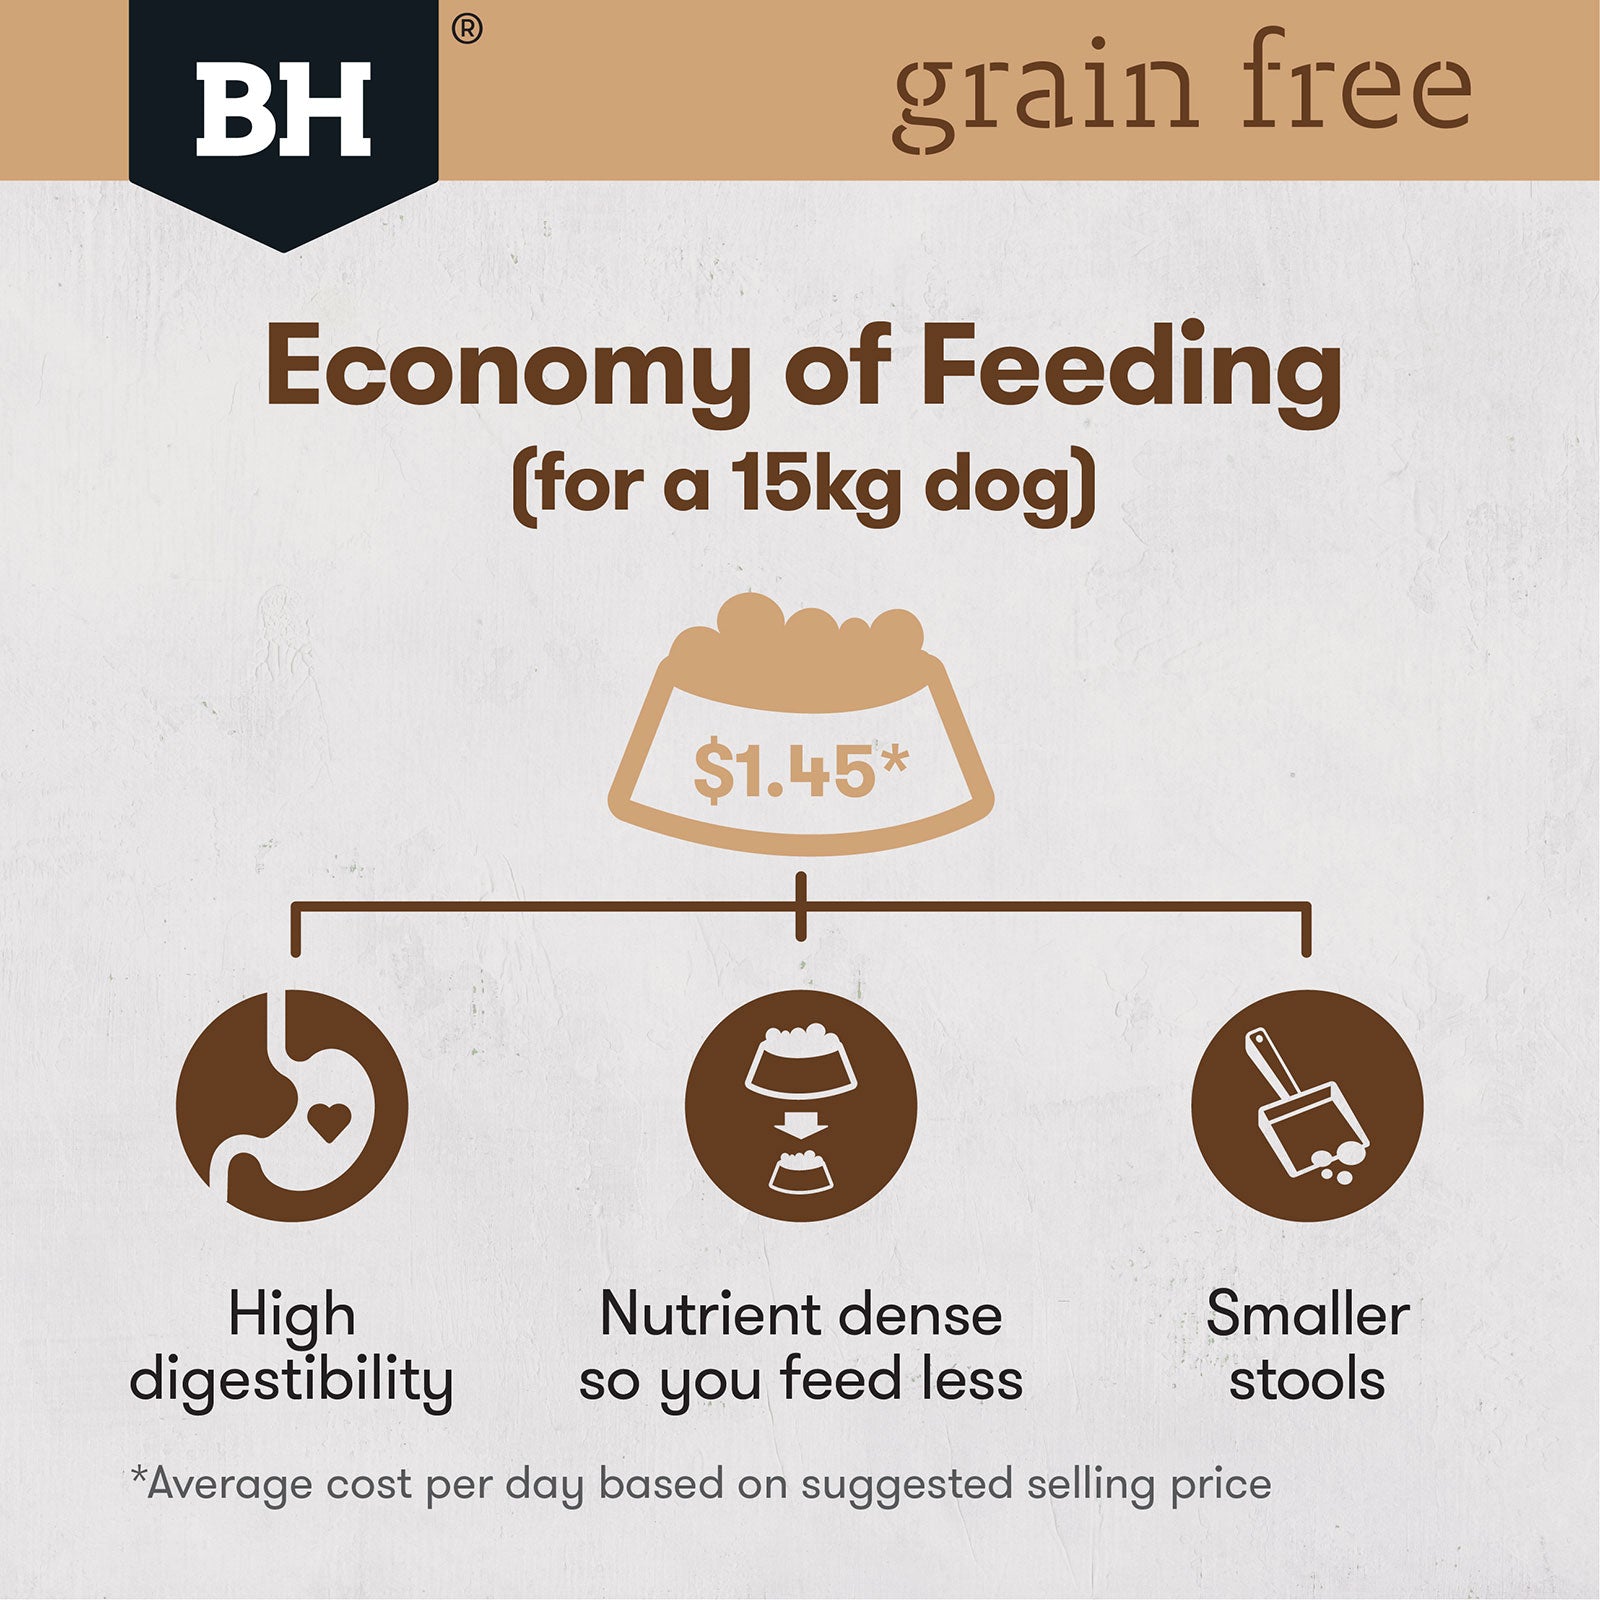 Black Hawk Grain Free Dog Food Adult Lamb